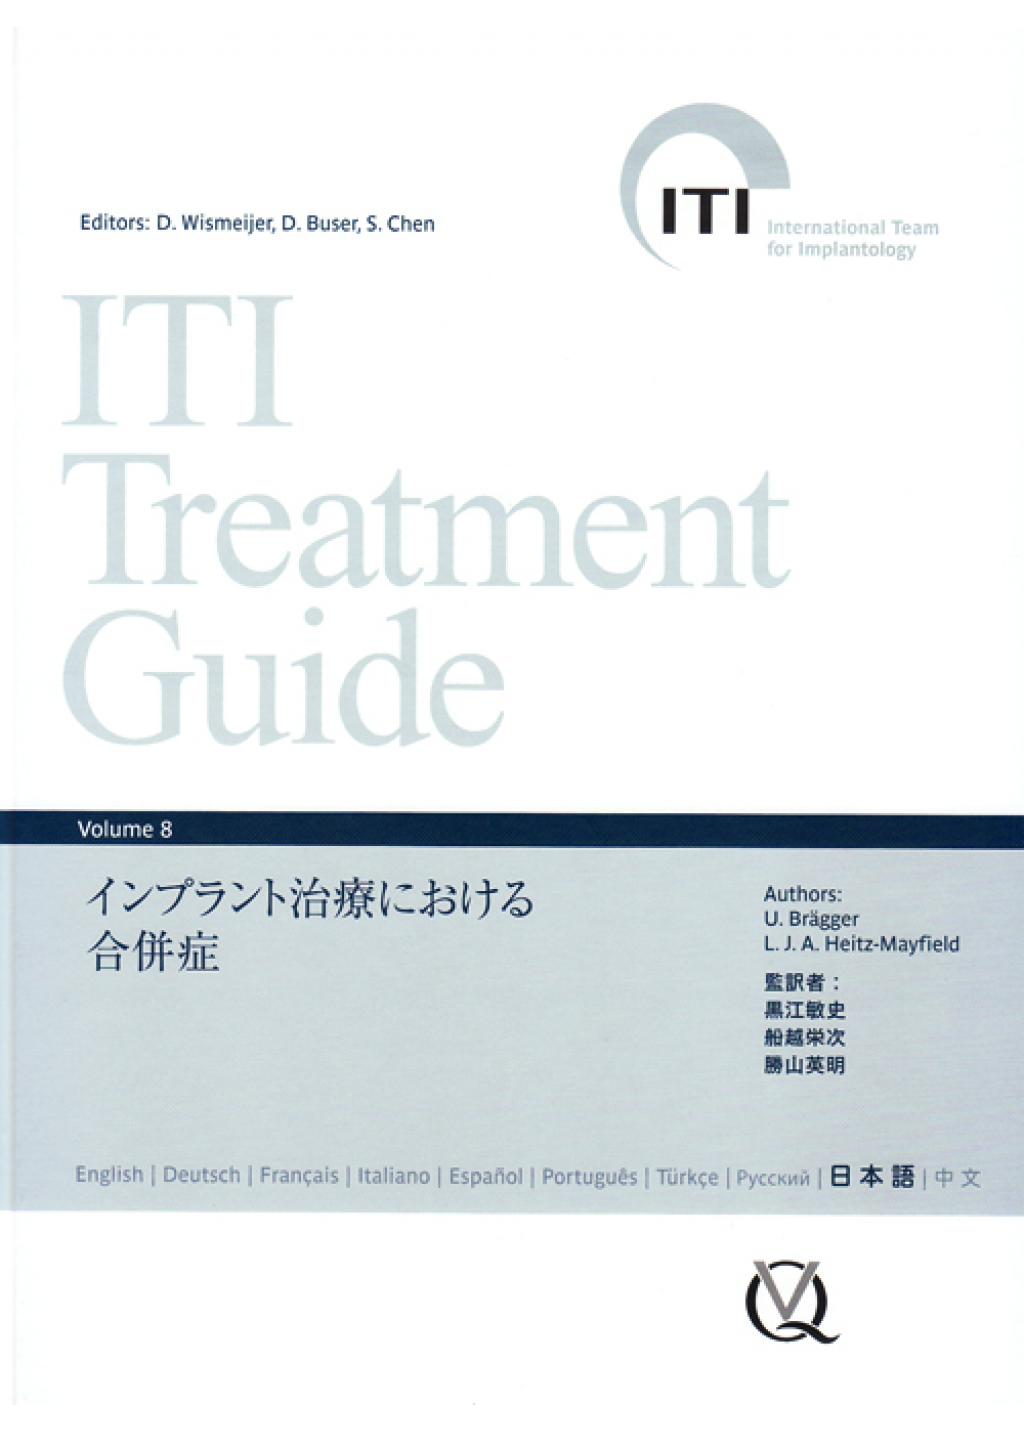 ITI Treatment Guide Volume 8 インプラント治療における合併症の購入